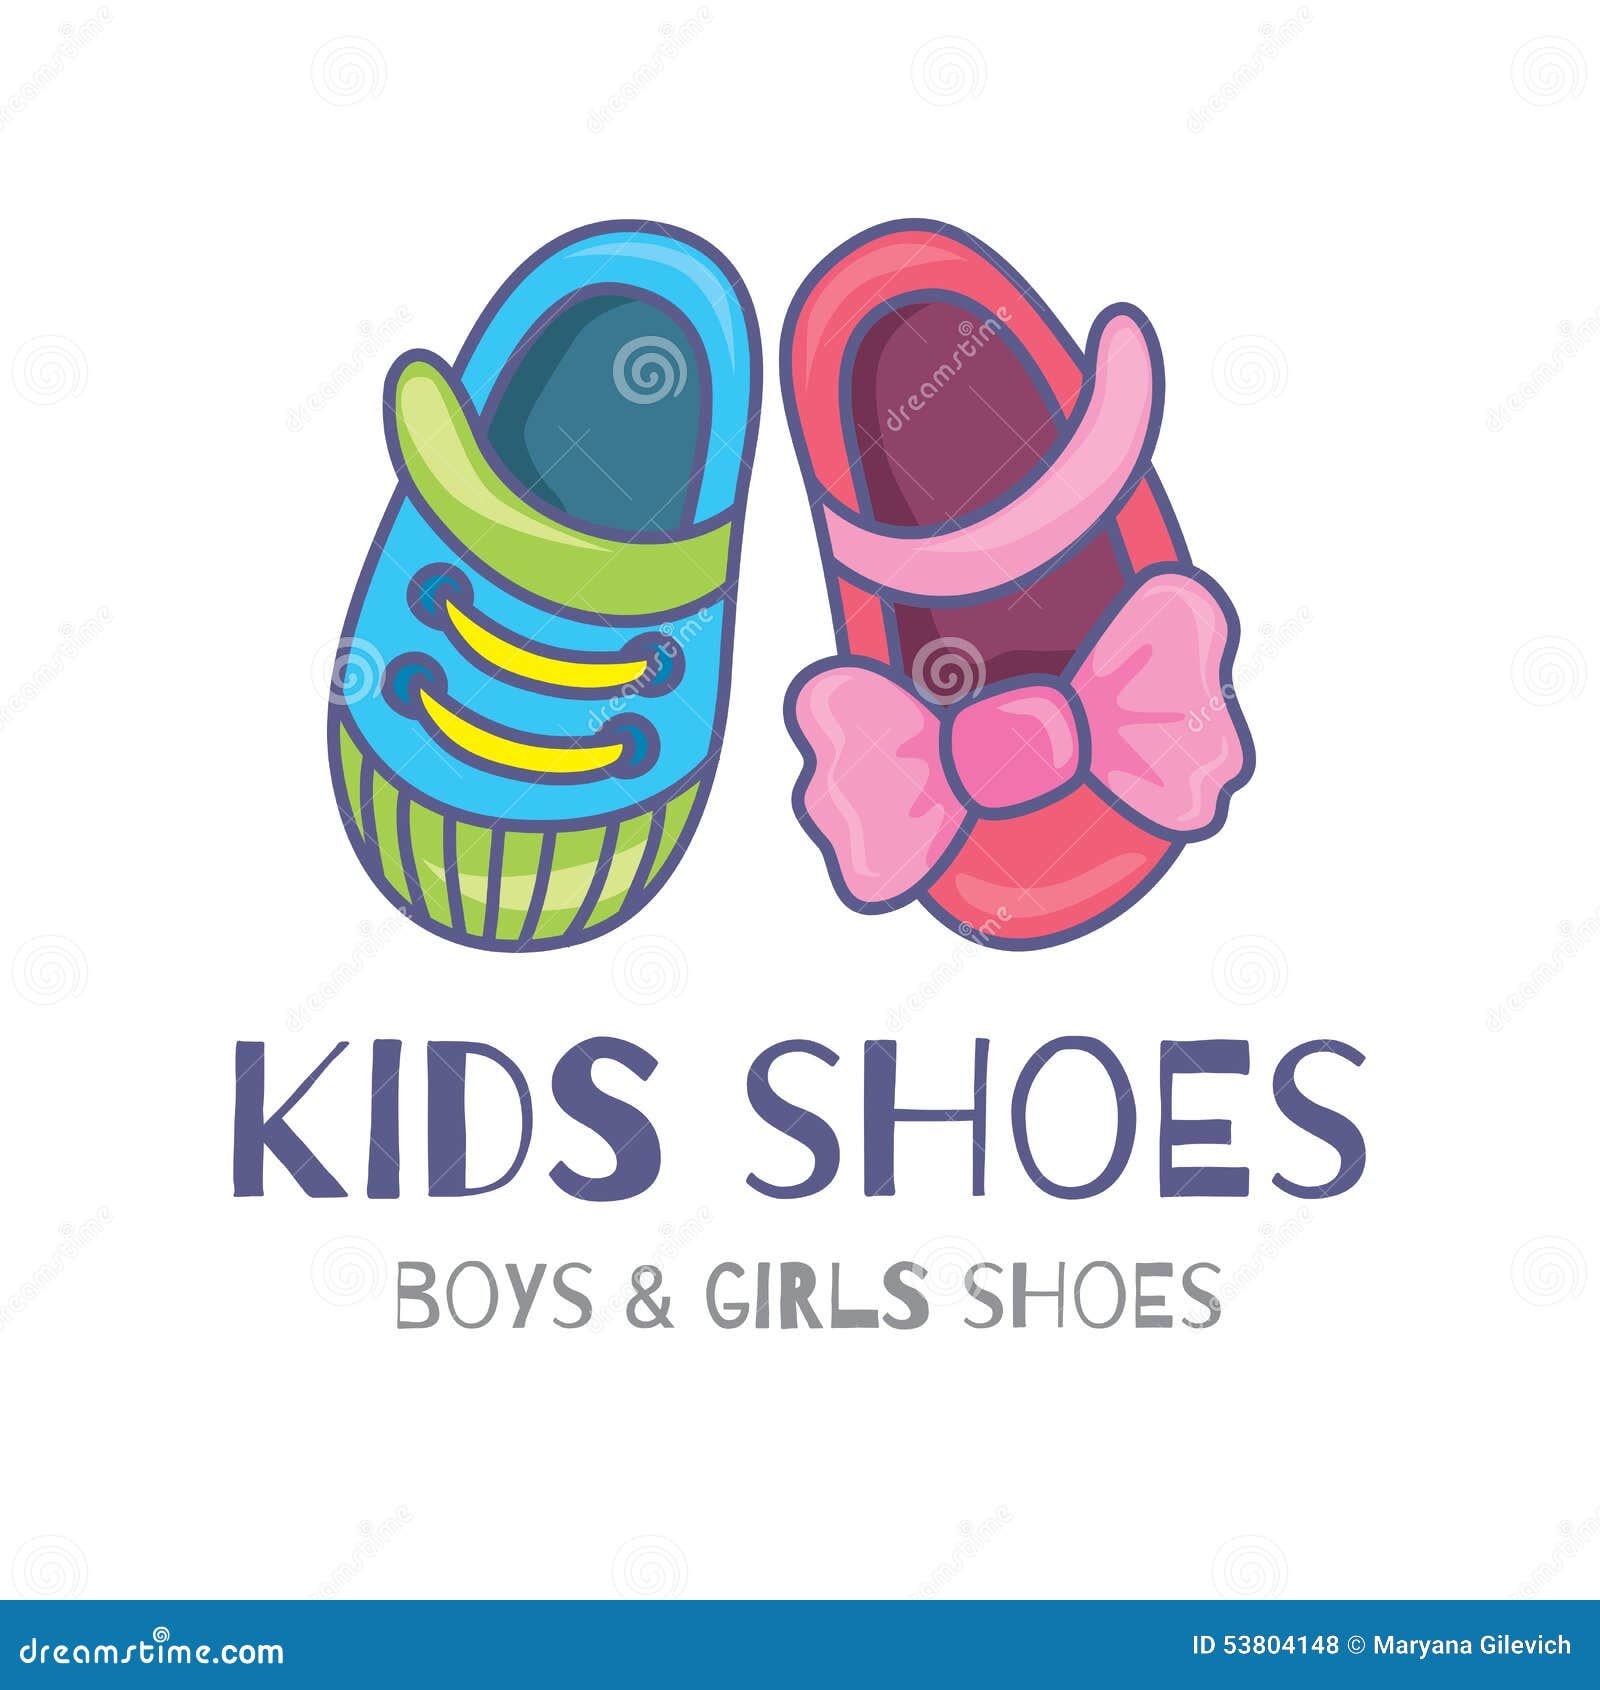 kids-shoes-logo-symbol-children-s-53804148.jpg